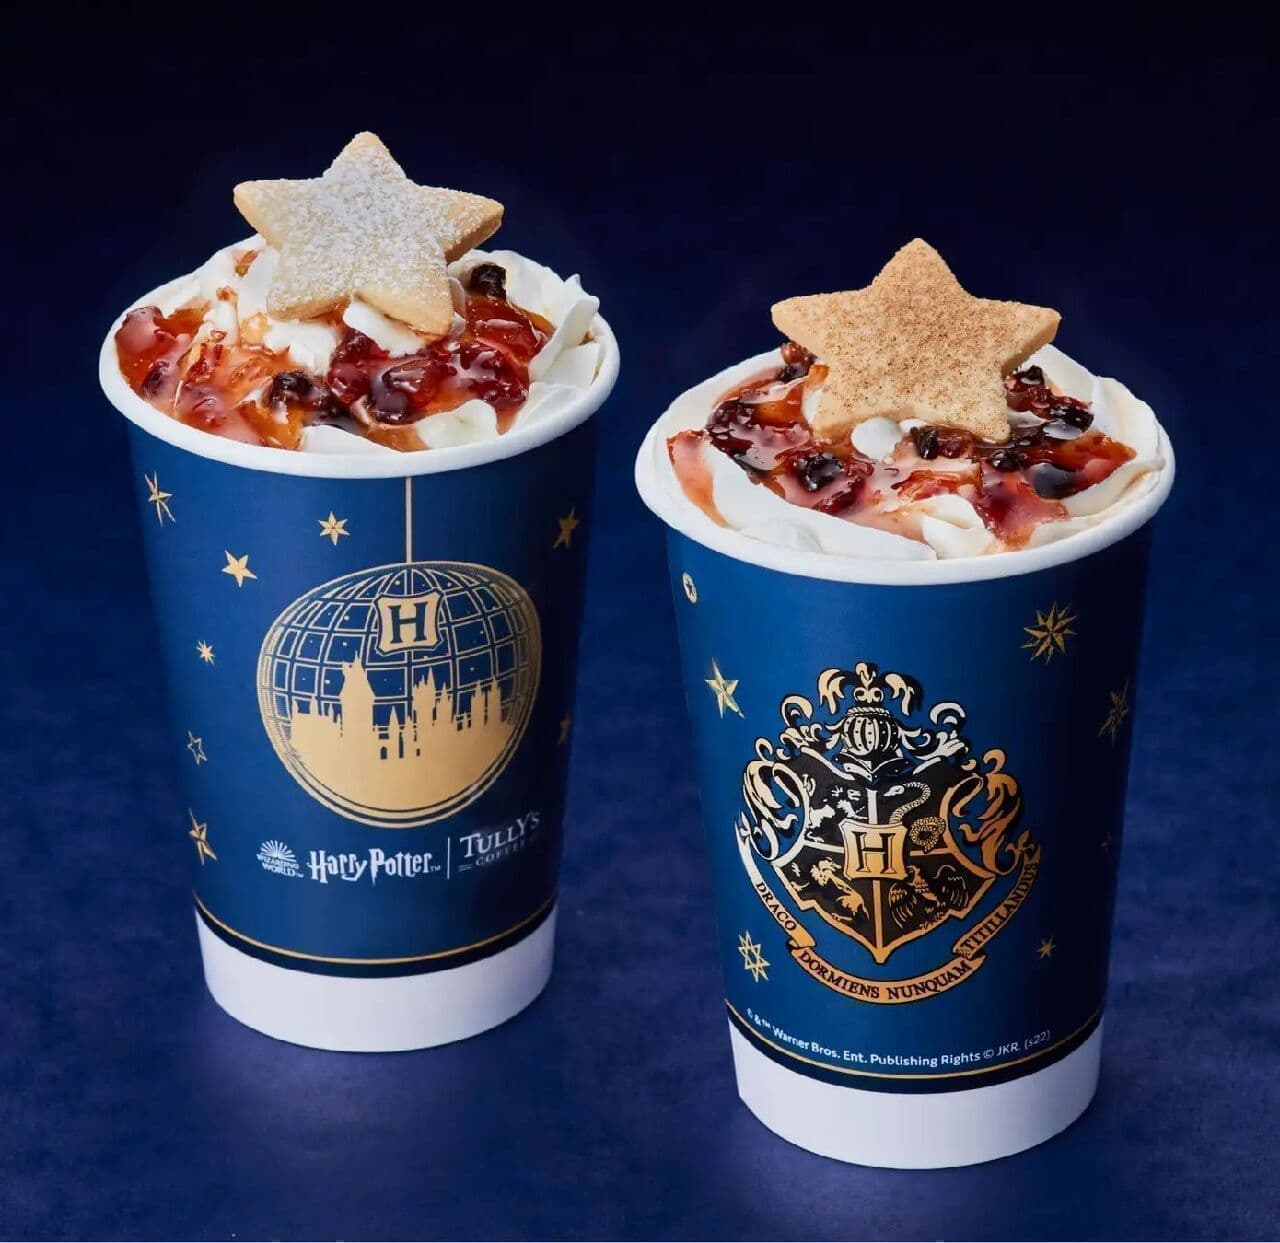 Tully's Coffee "Harry Potter Mince Pie Latte".